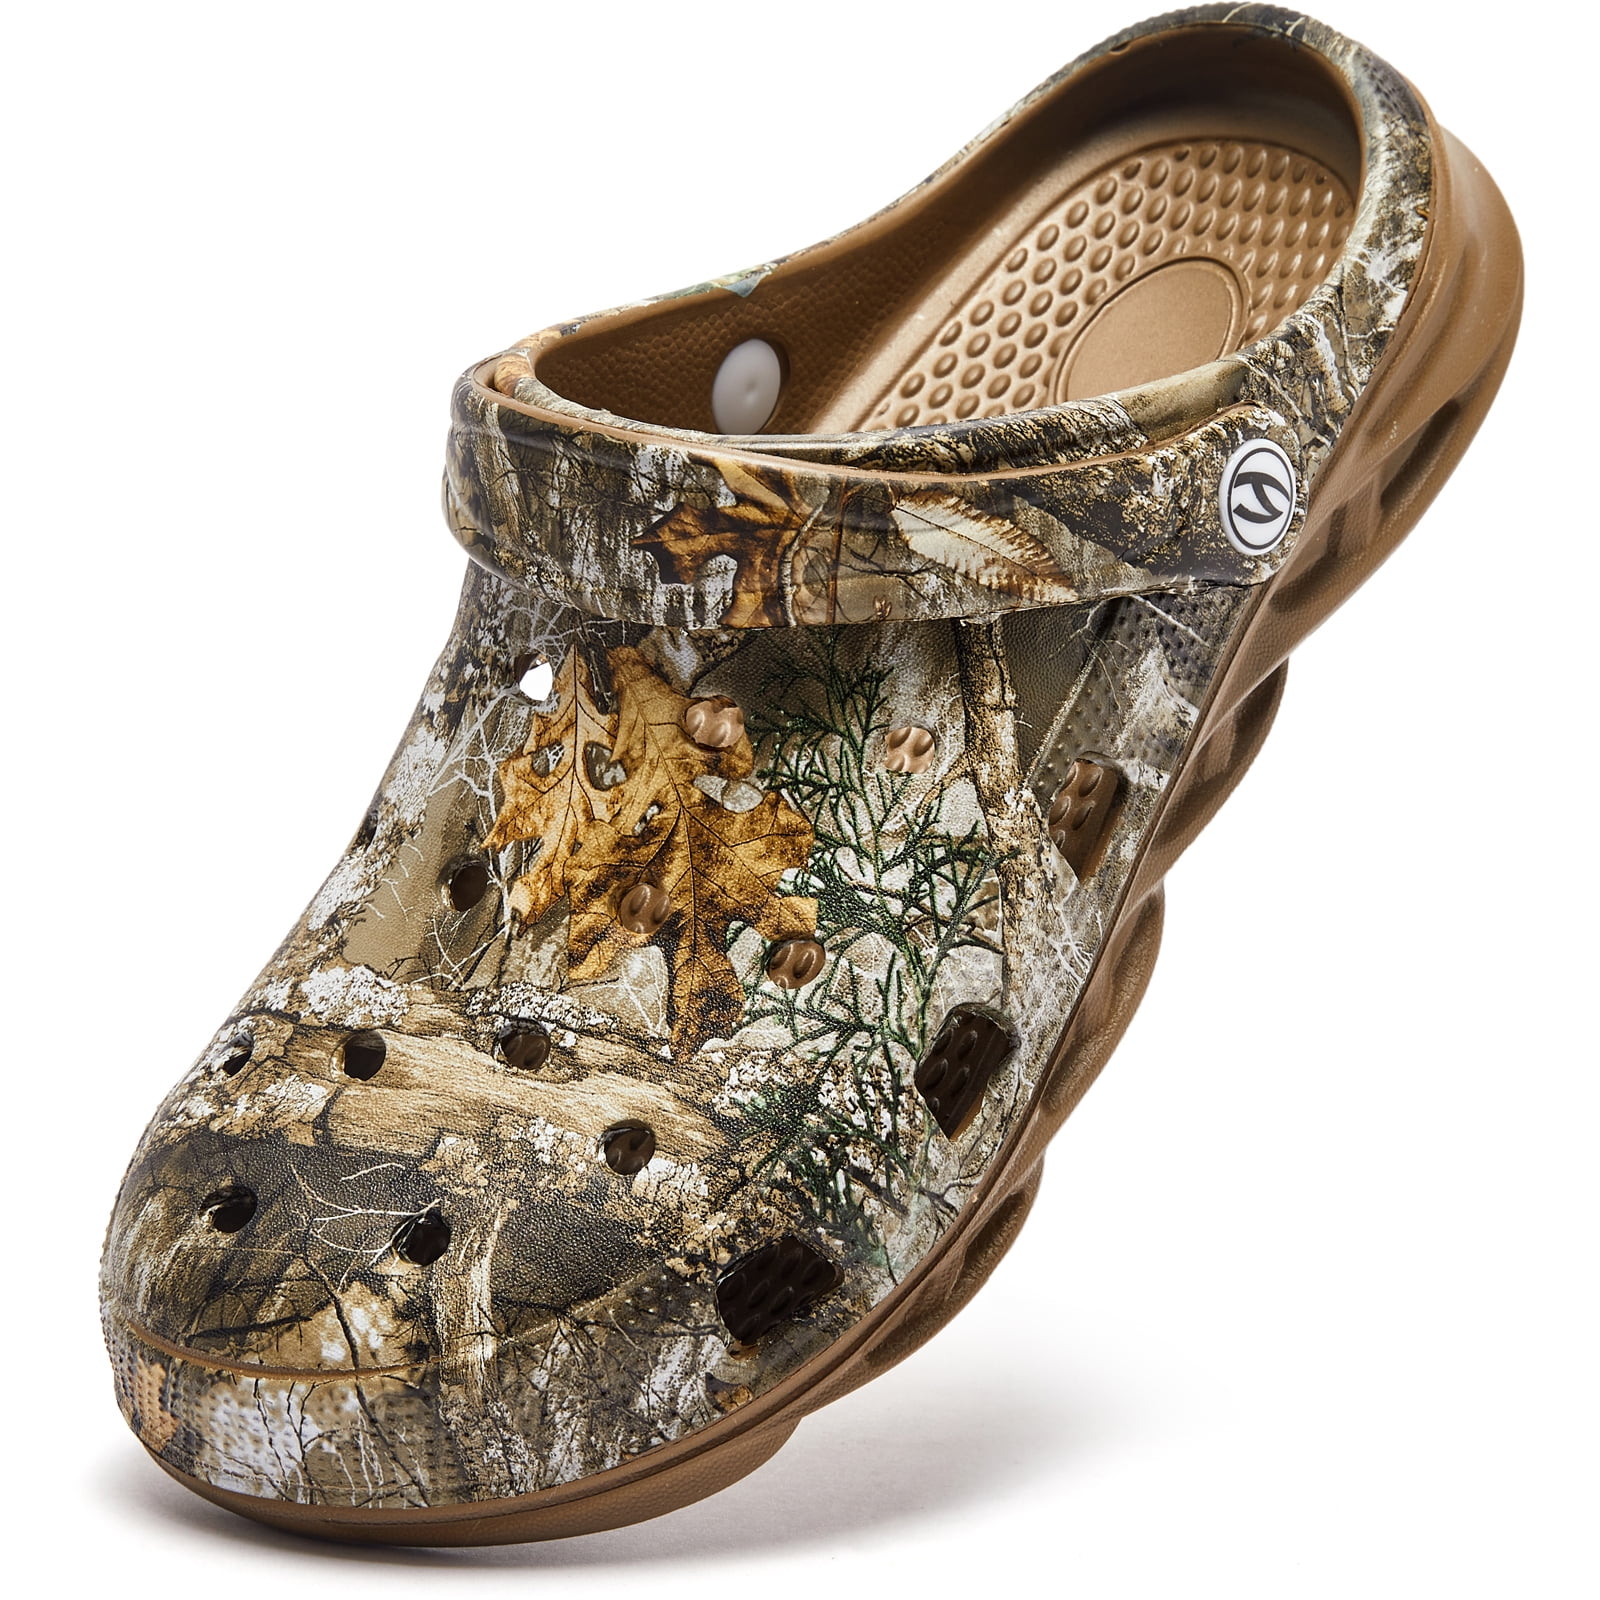 HOBIBEAR Unisex Garden Clogs Shoes Slippers Sandals for Women and Men ...